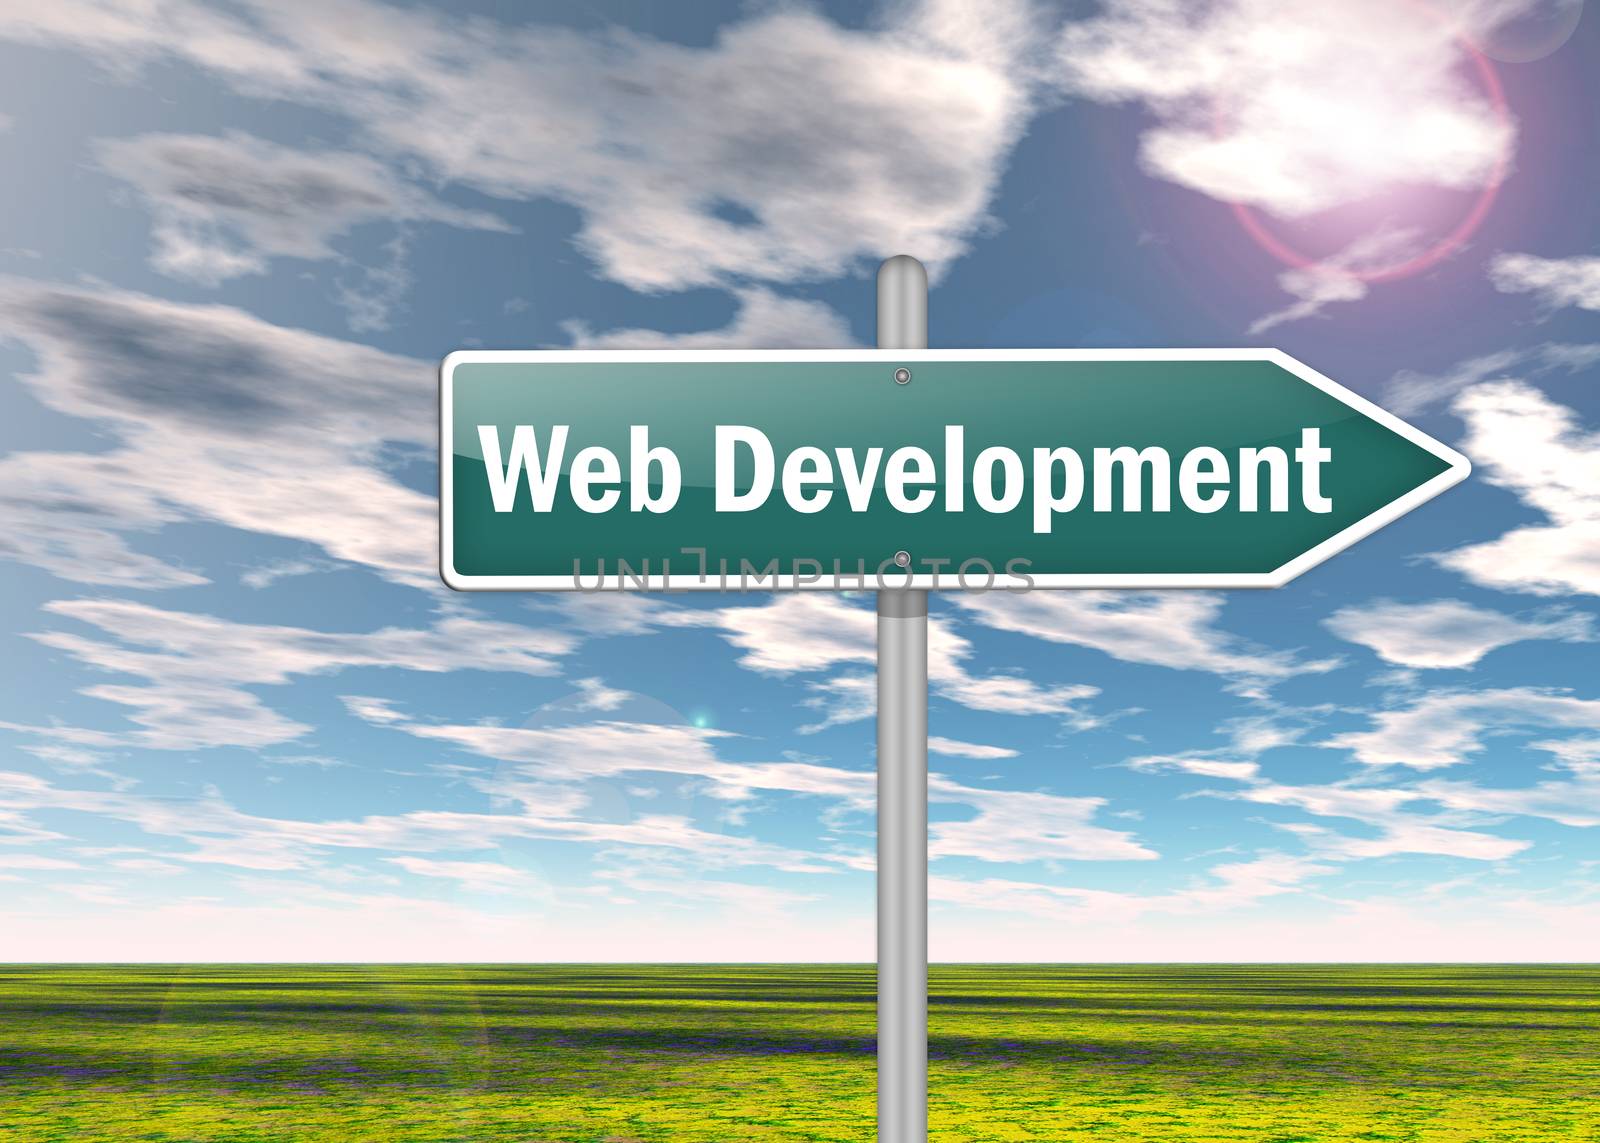 Signpost "Web Development"